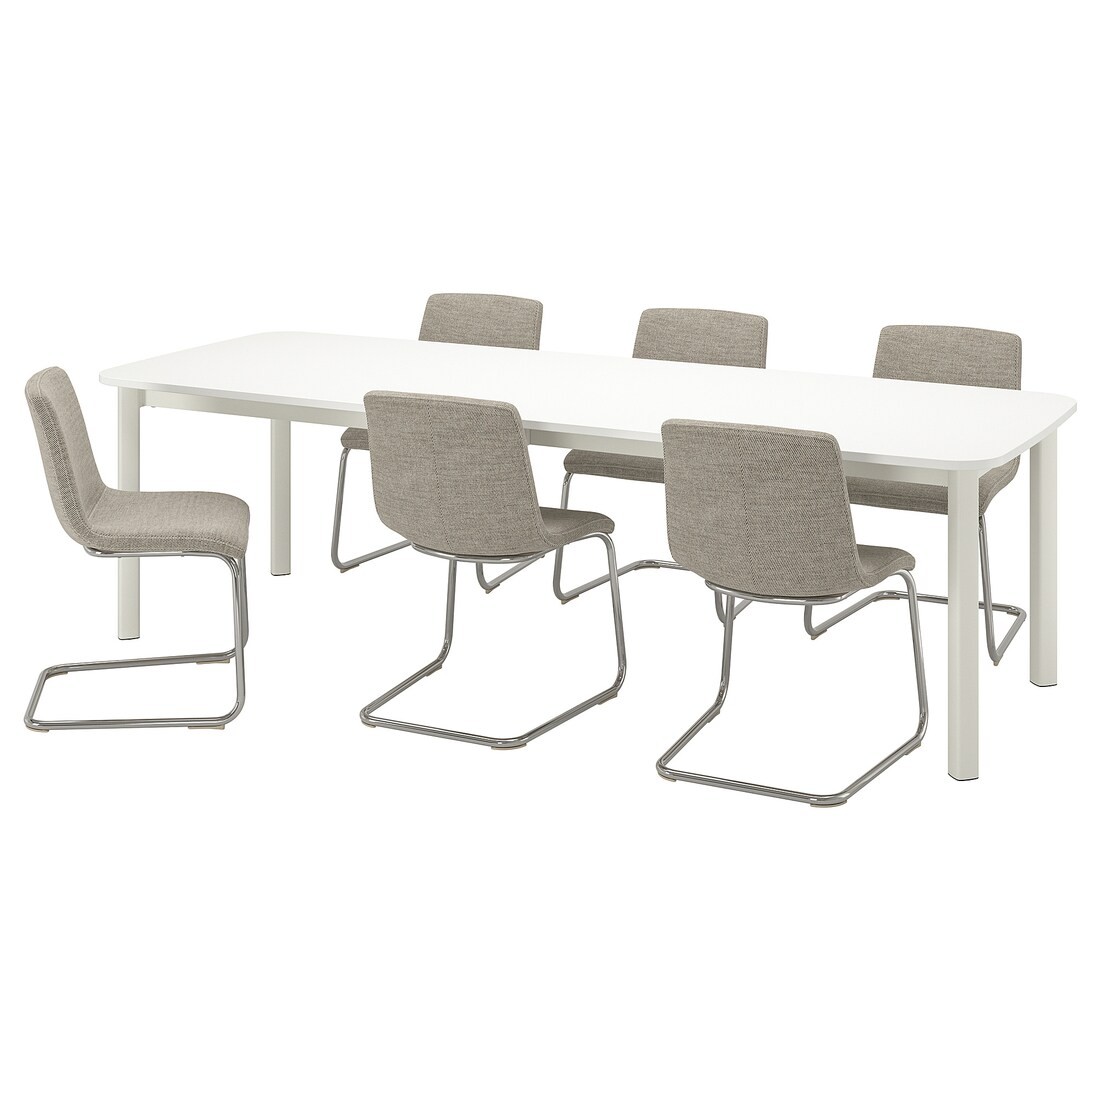 STRANDTORP / LUSTEBO Стол и 6 стульев, белый хром / Viarp бежевый / коричневый, 150/260 см